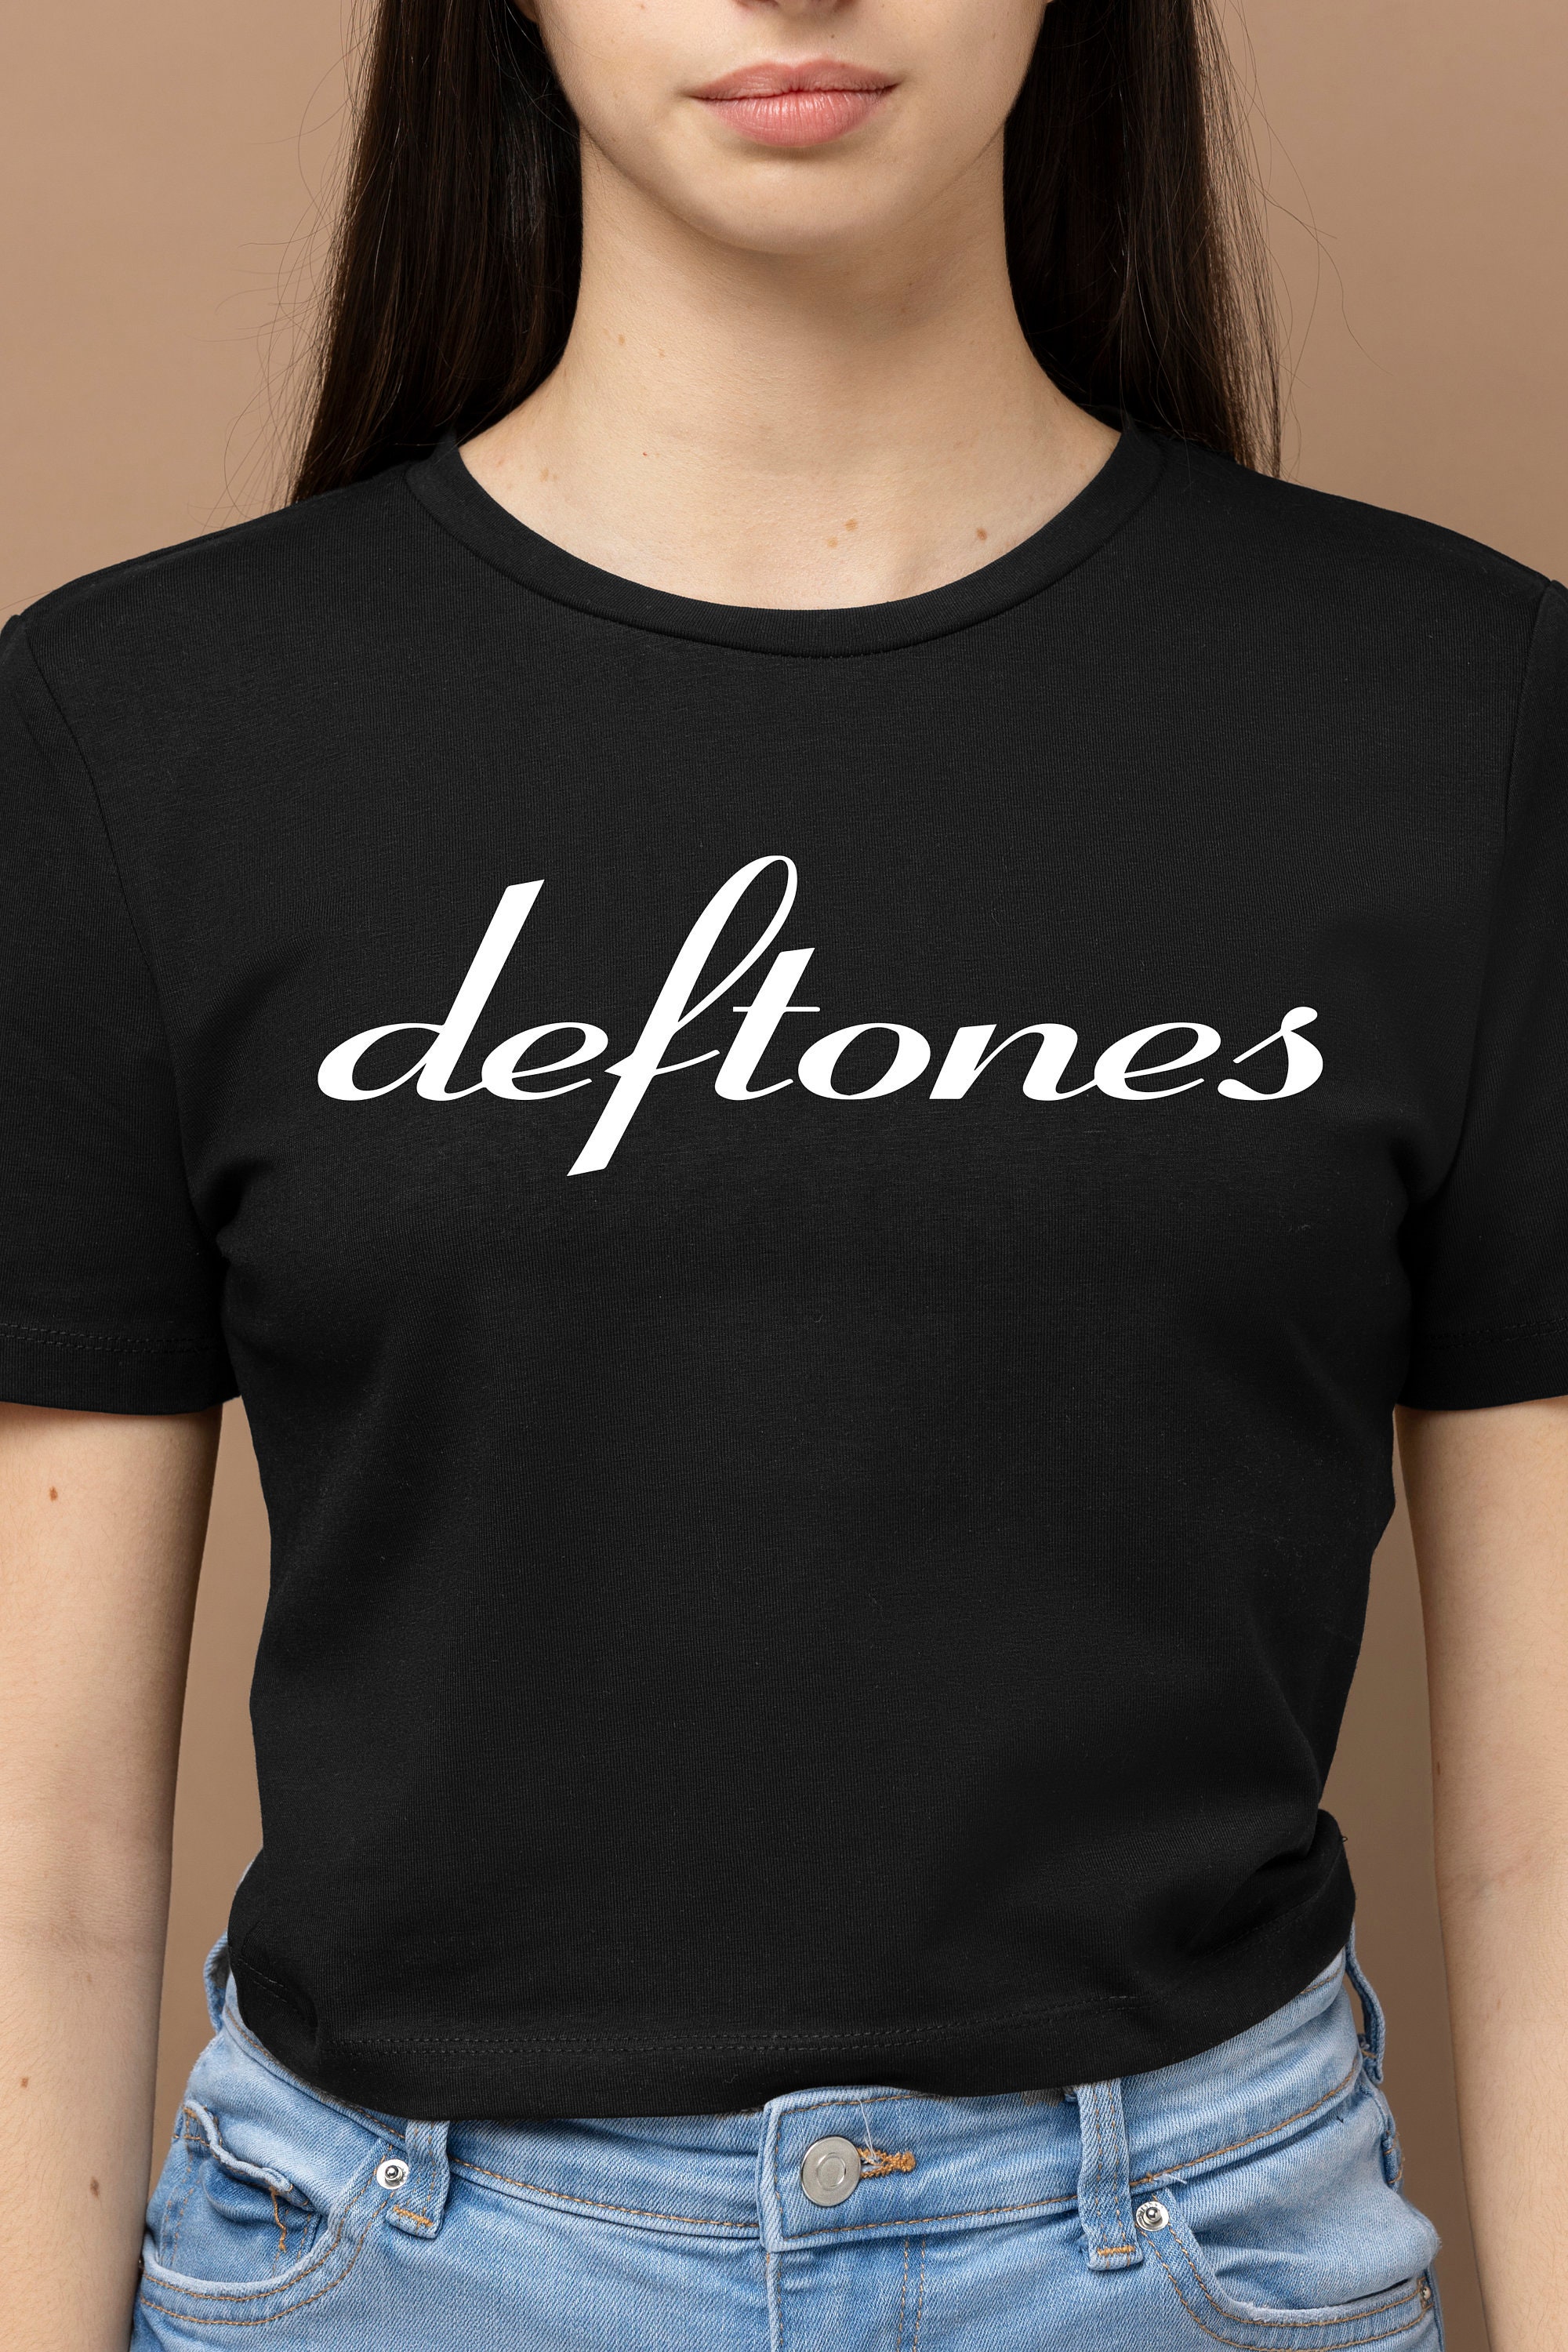 Deftones T-shirt, Sick New World -  Denmark